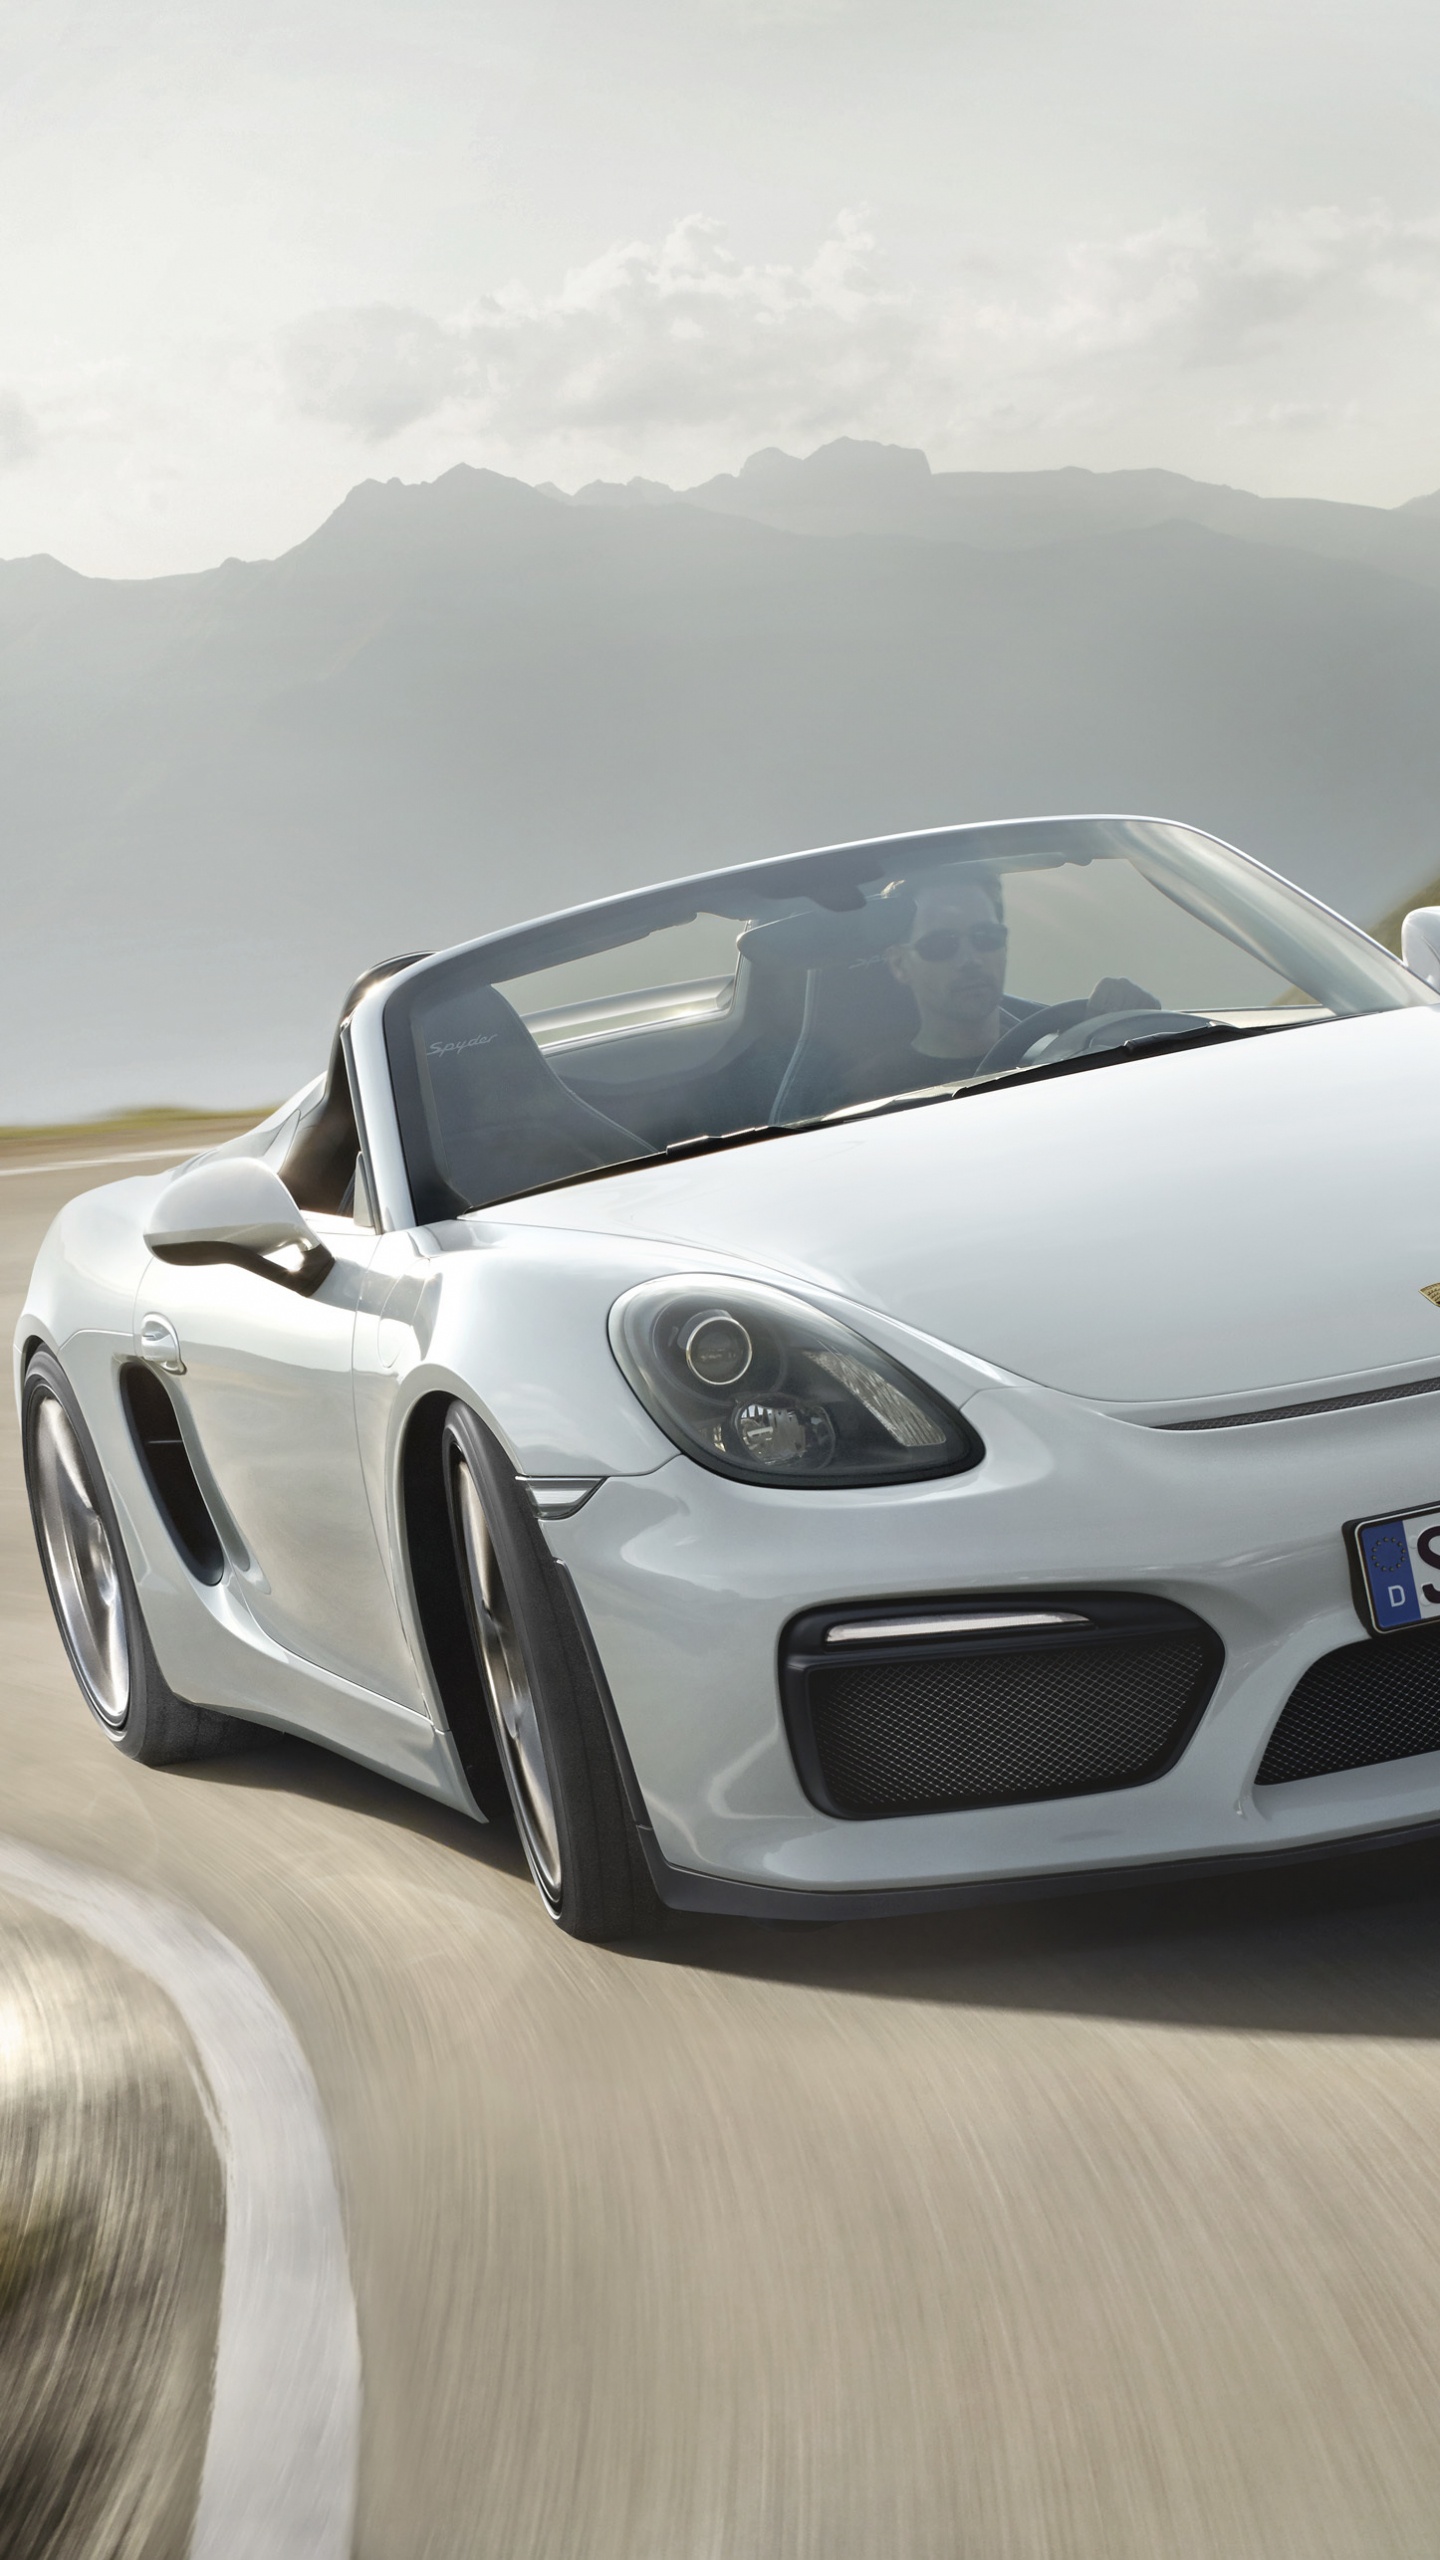 White Porsche 911 on Road During Daytime. Wallpaper in 1440x2560 Resolution